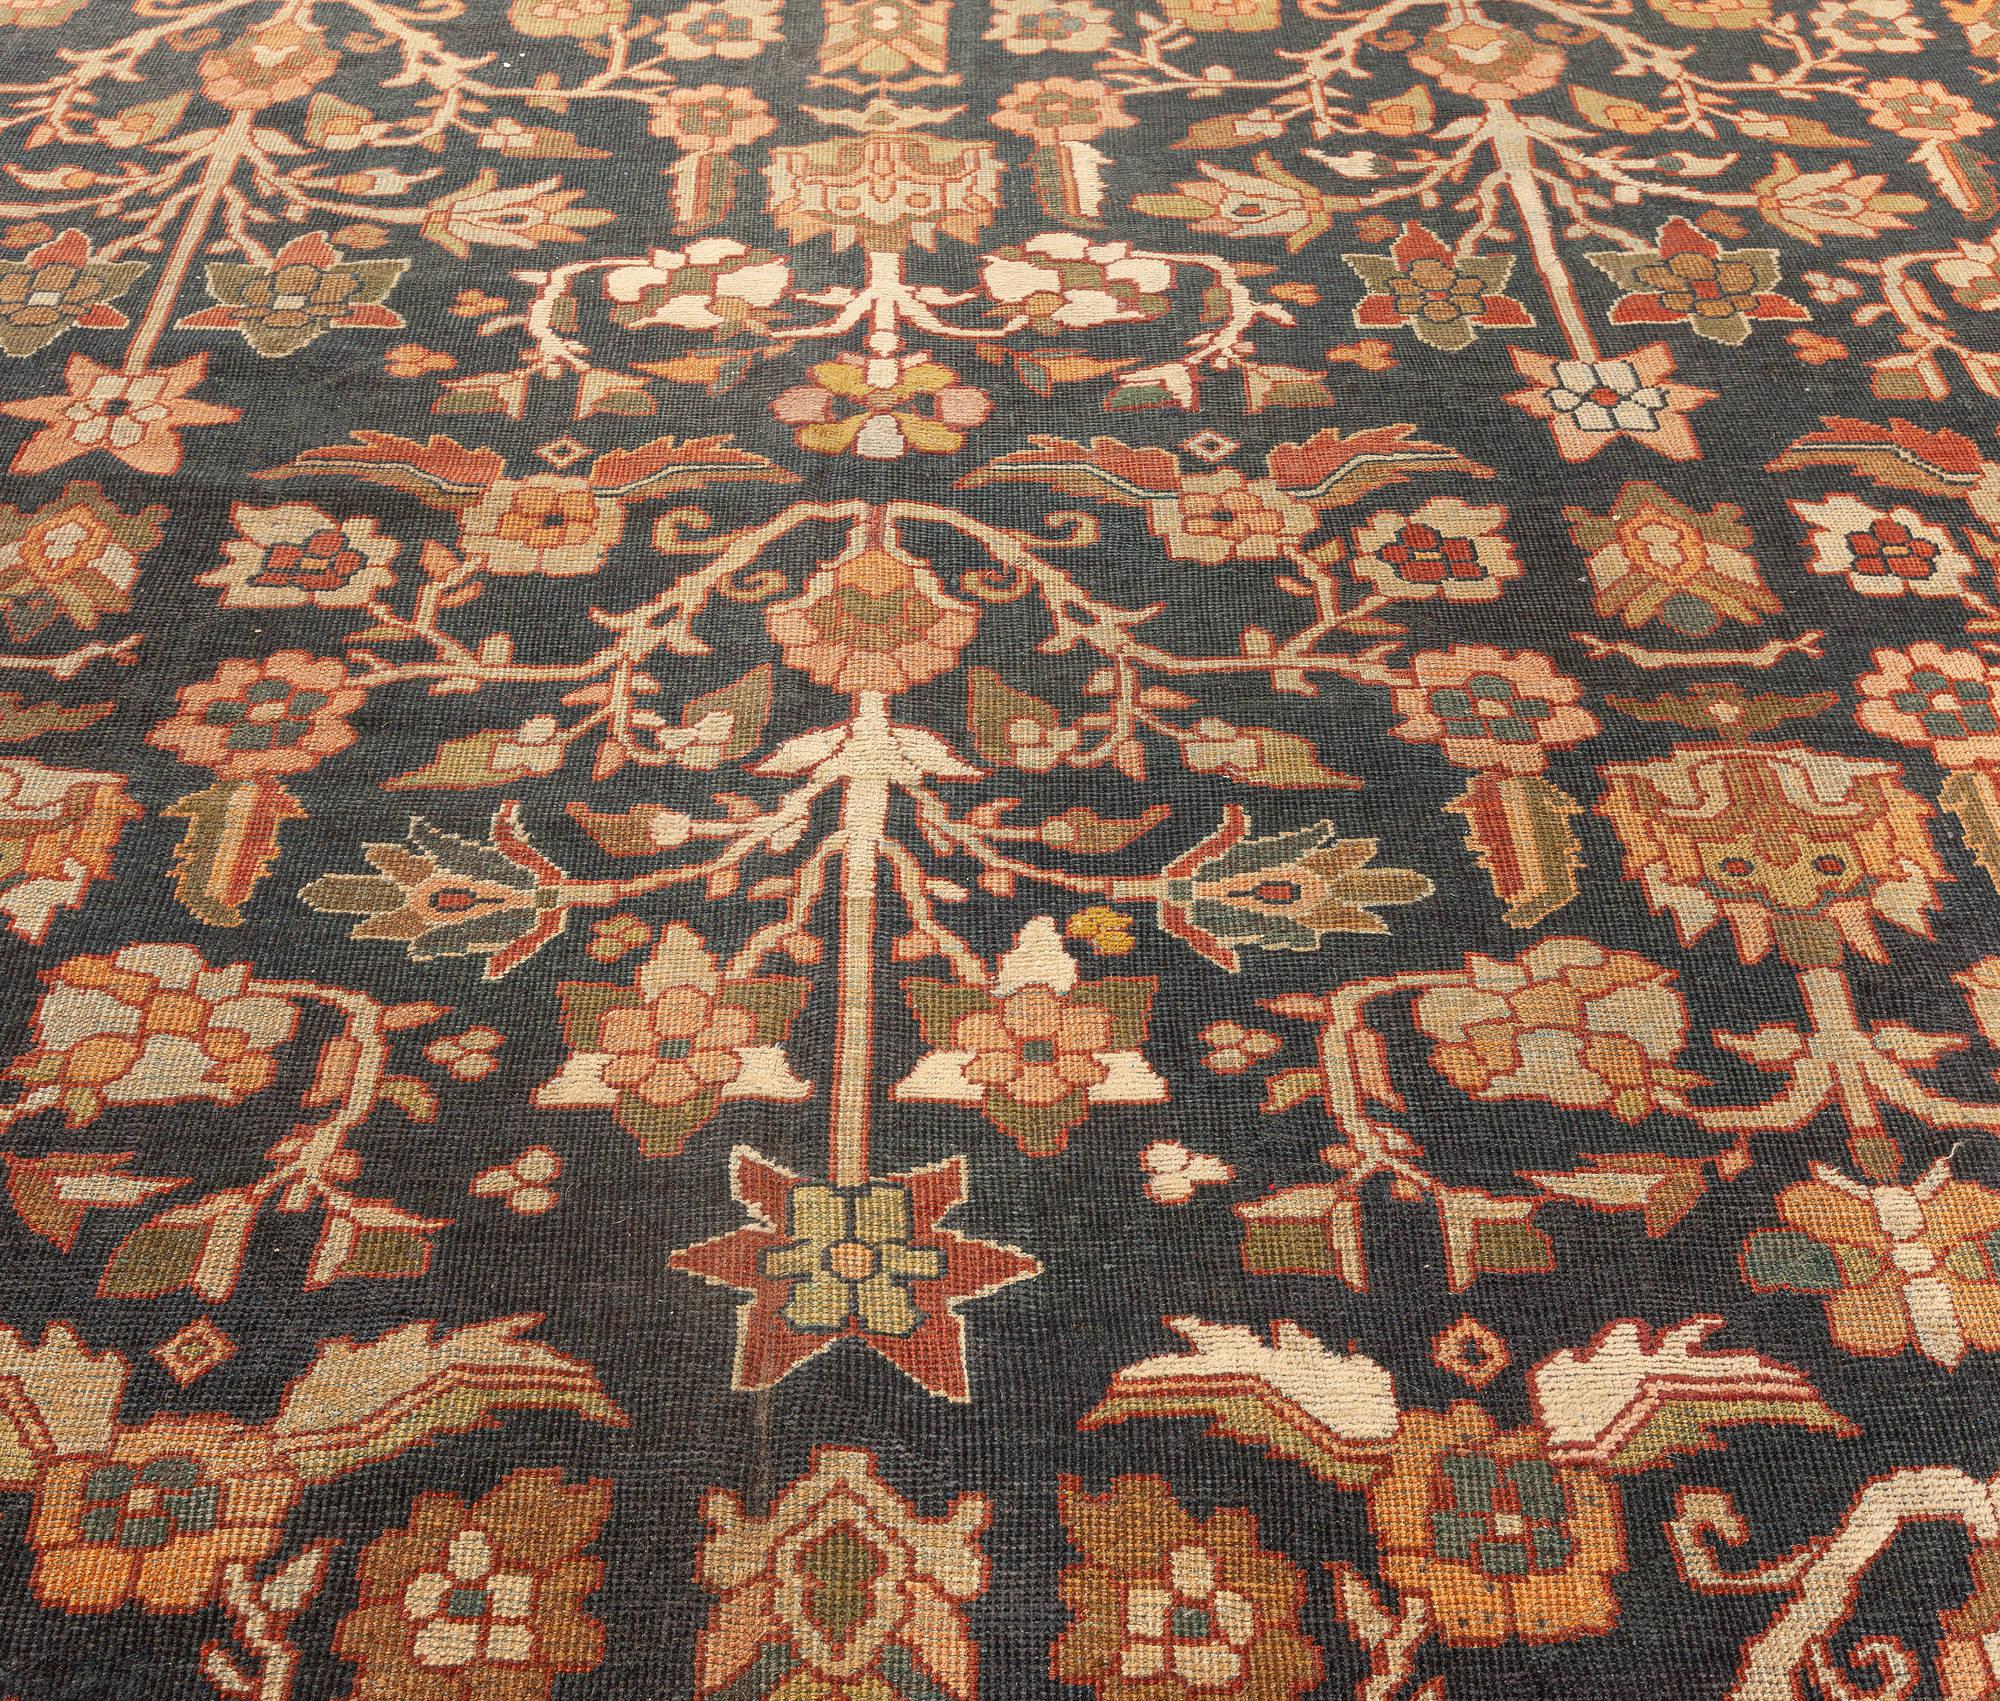 Antique Persian Sultanabad botanic handmade wool rug
Size: 13'0